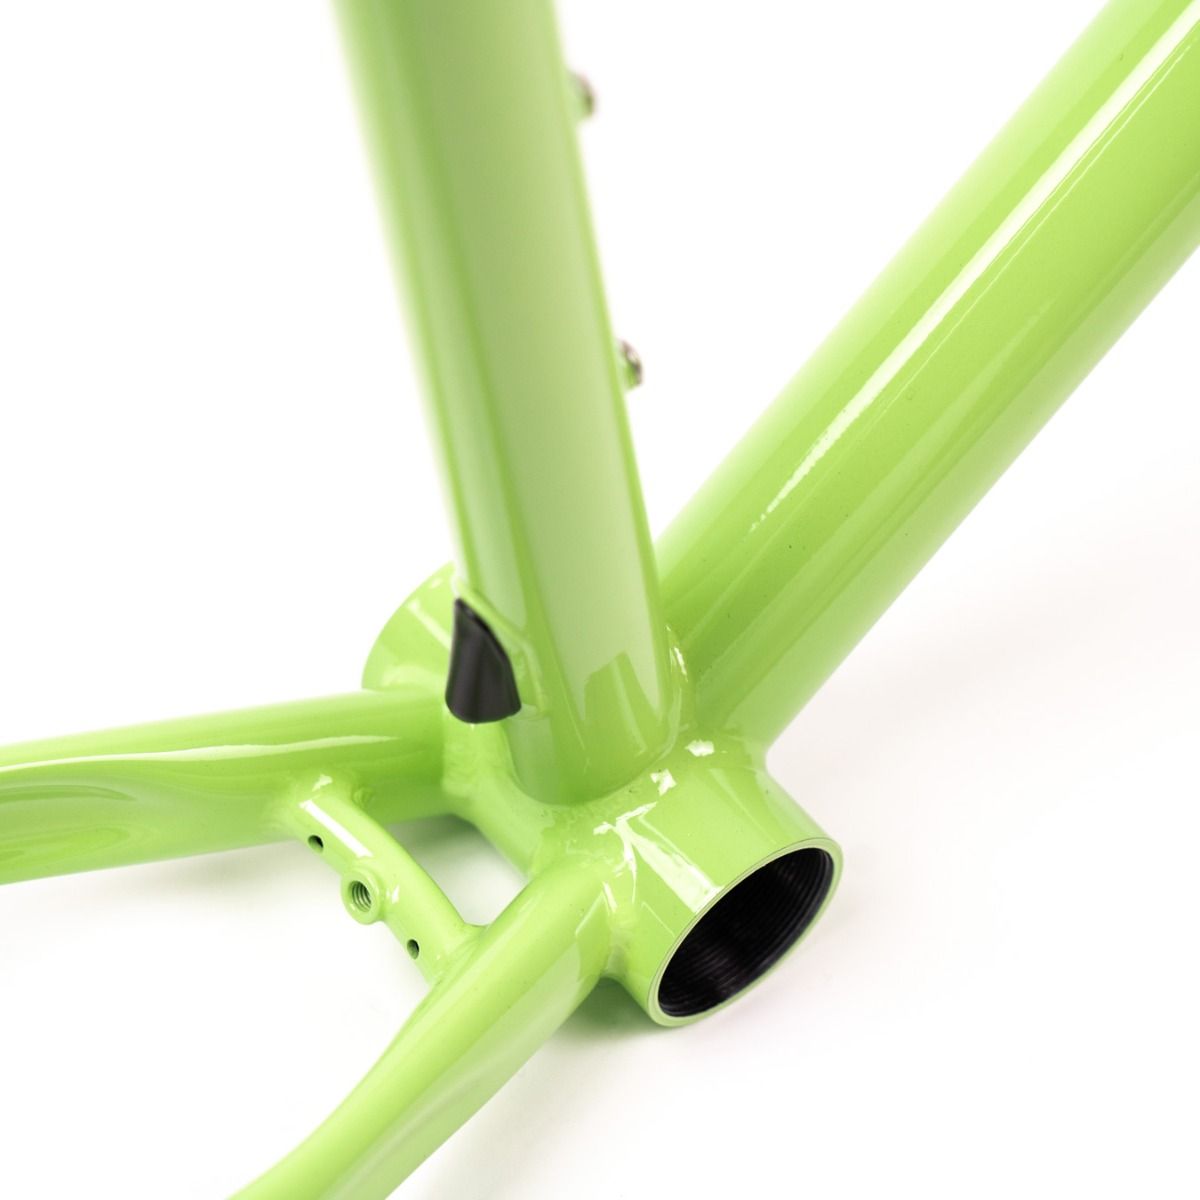 Crust Bikes - Wombat (green)